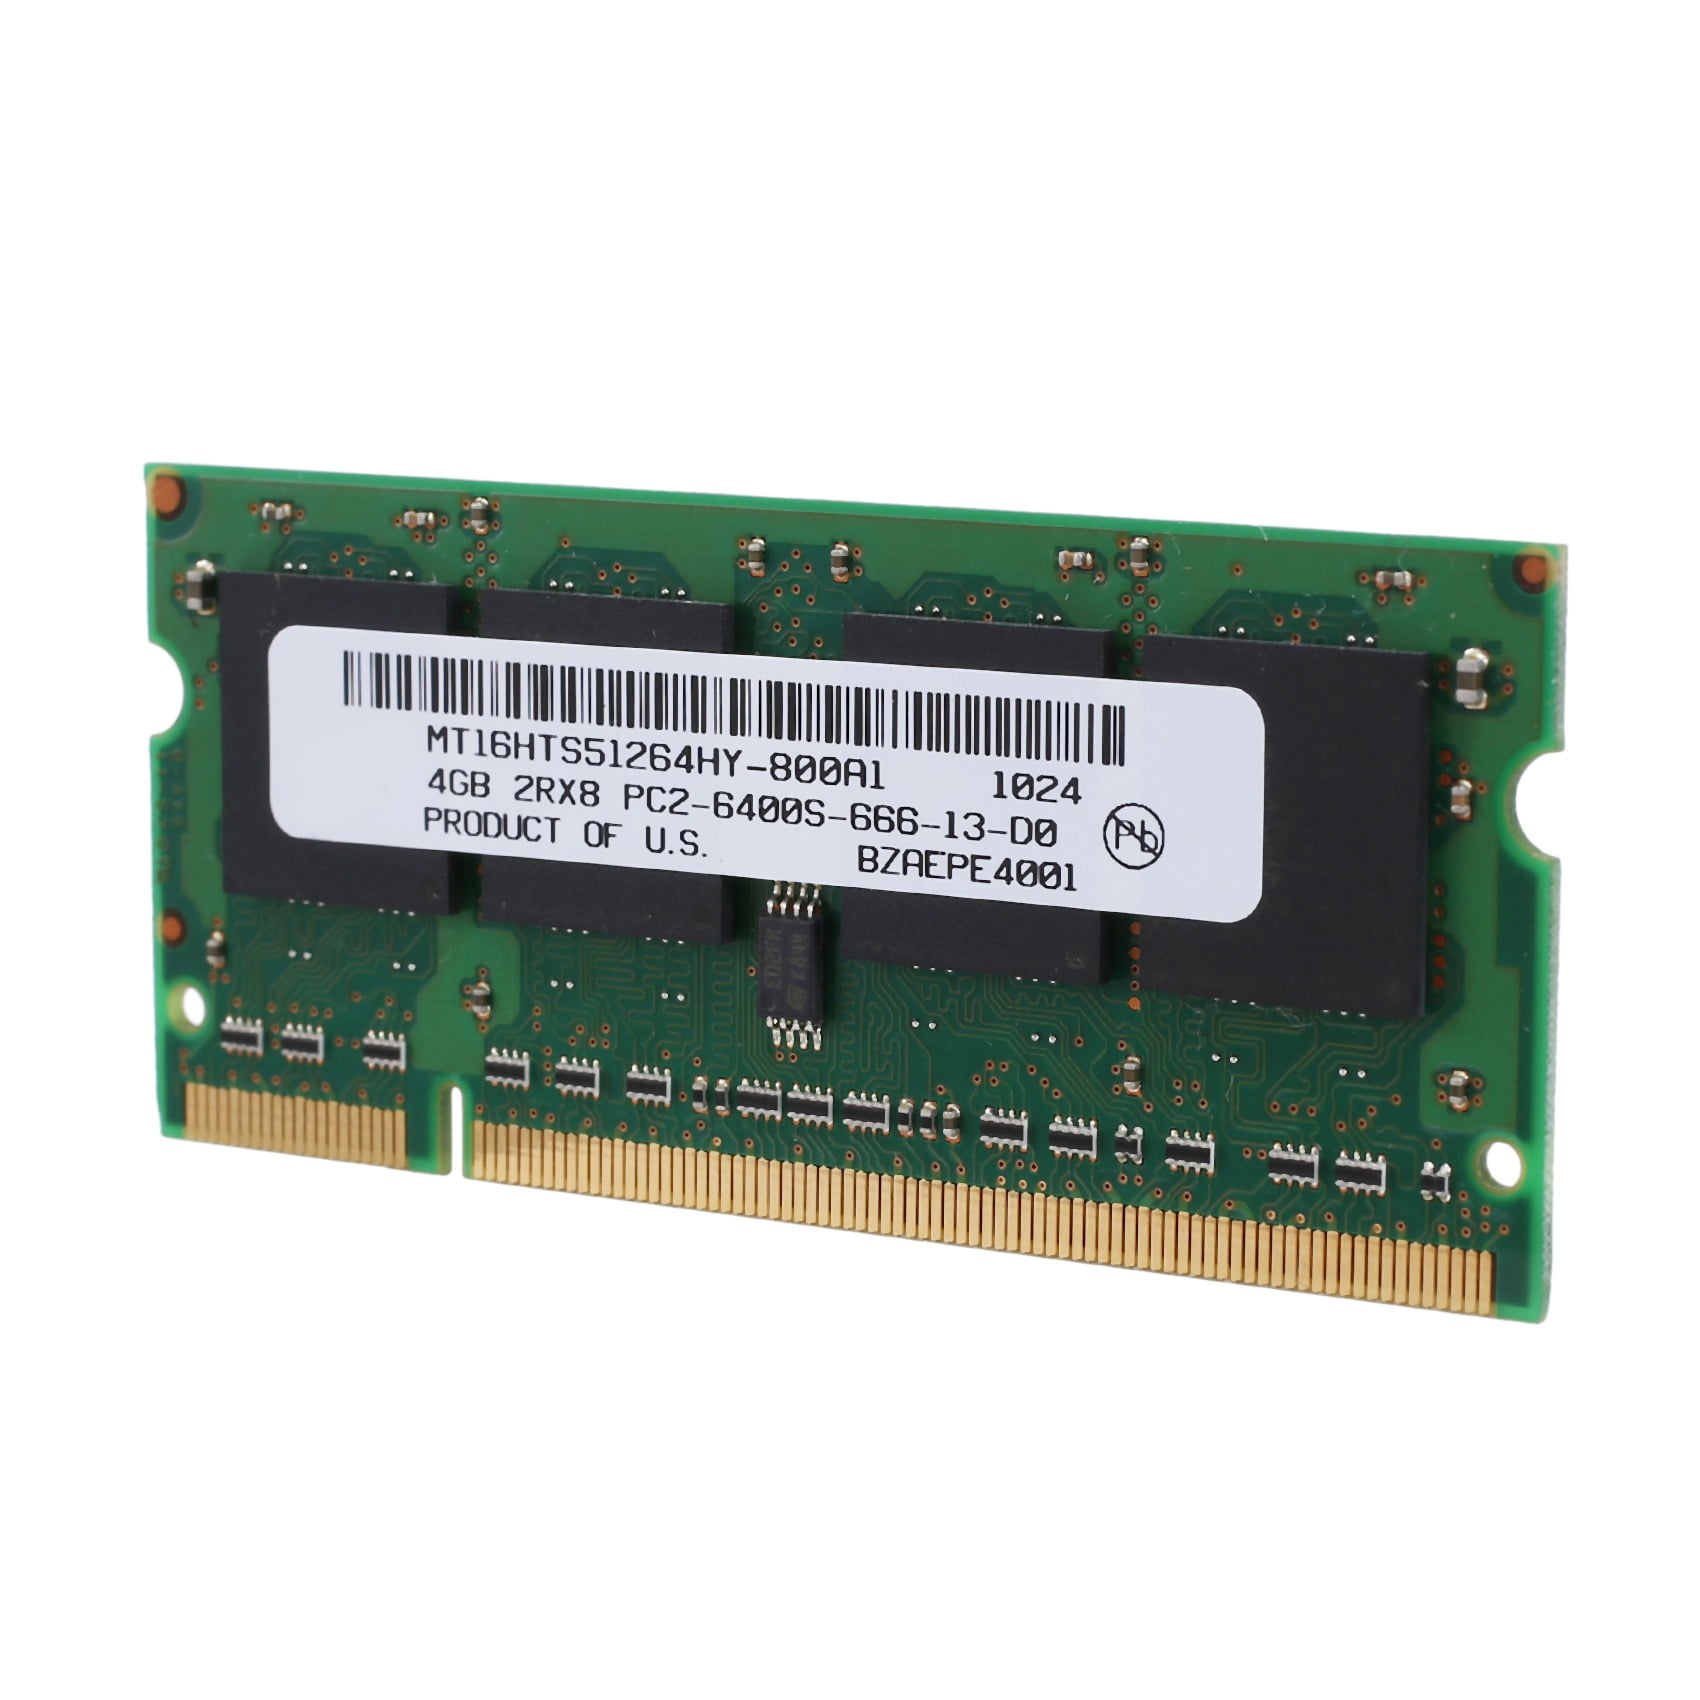 DDR2 Laptop 800Mhz PC2 6400 SODIMM 2RX8 200 Pins for Intel AMD Laptop Memory - Walmart.com